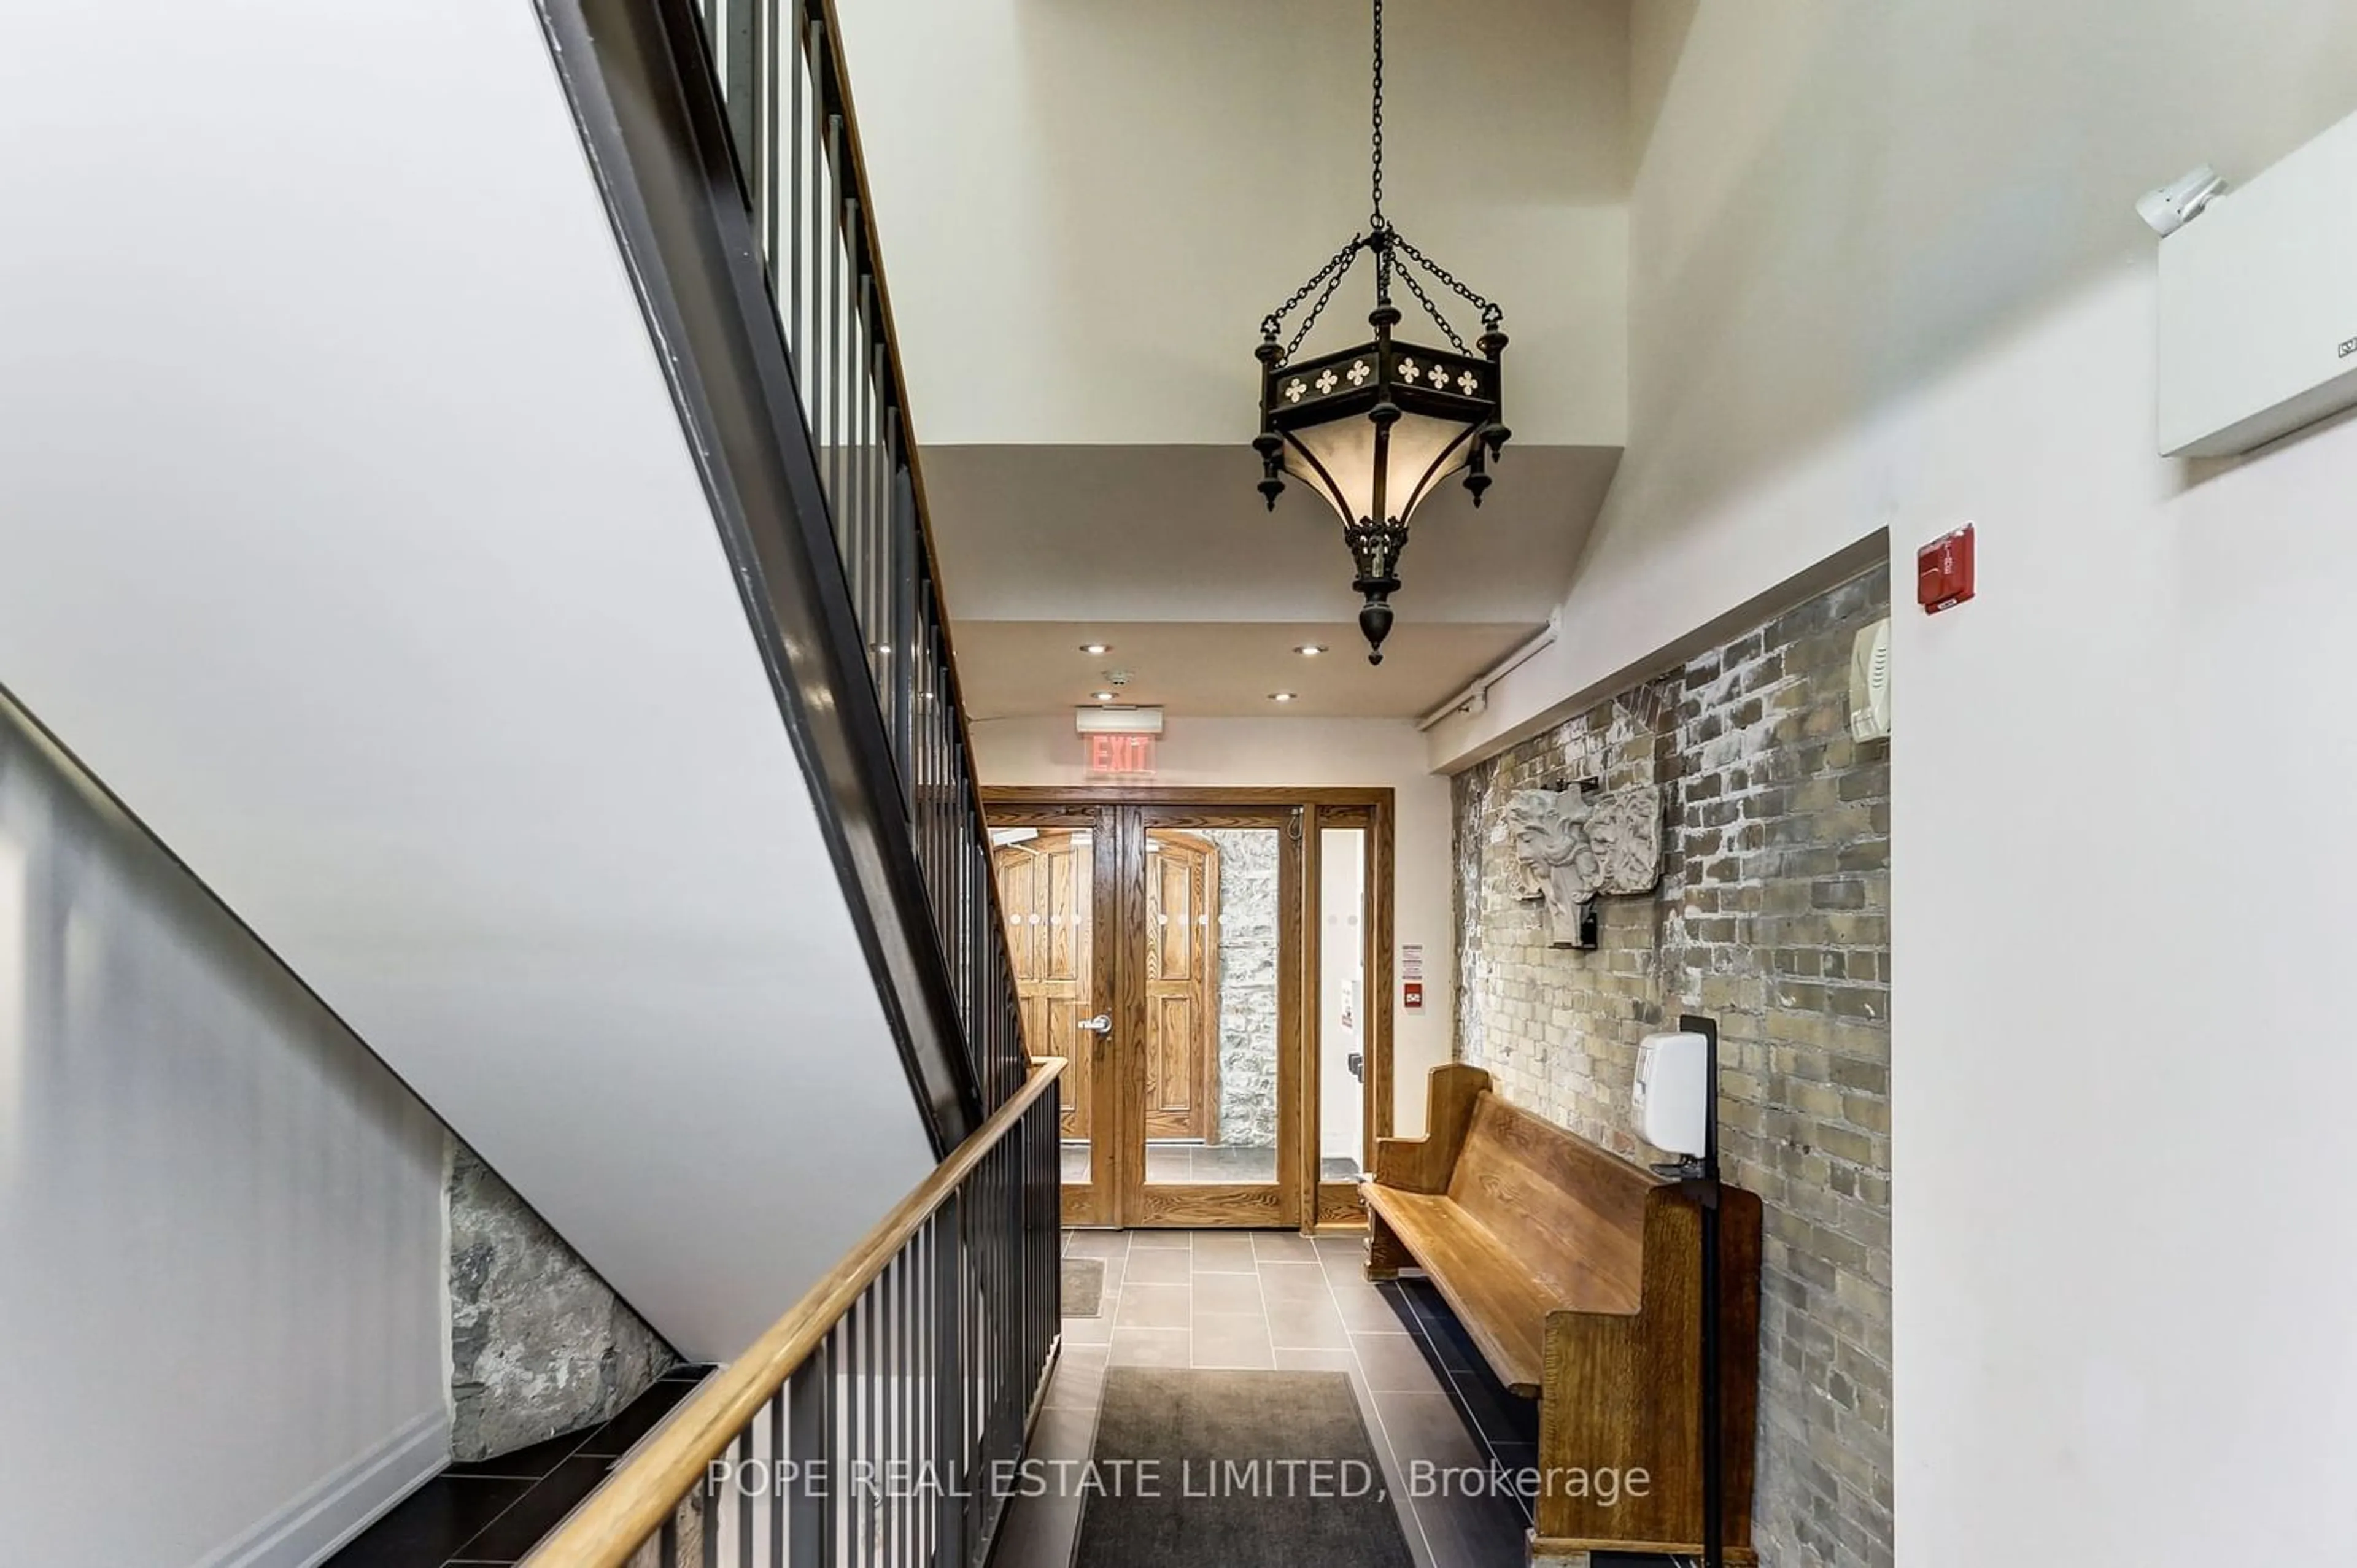 Indoor foyer for 384 Sunnyside Ave #202, Toronto Ontario M6R 2S1